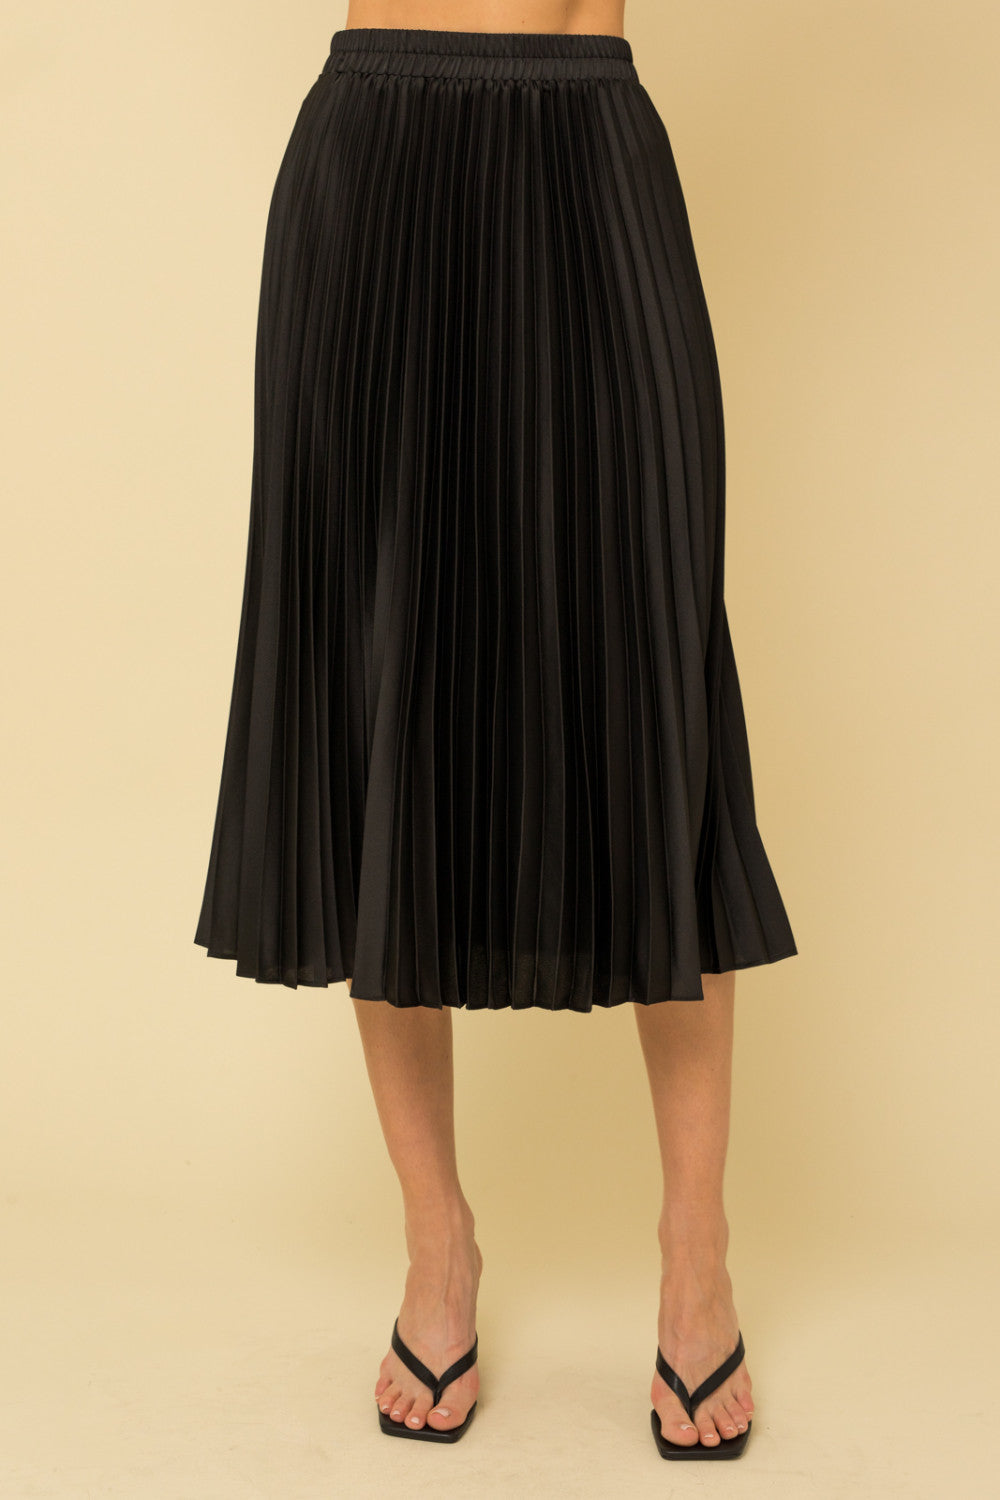 Jillian Sunburst Pleated Satin Skirt, Black-Skirts-Inspired by Justeen-Women's Clothing Boutique in Chicago, Illinois